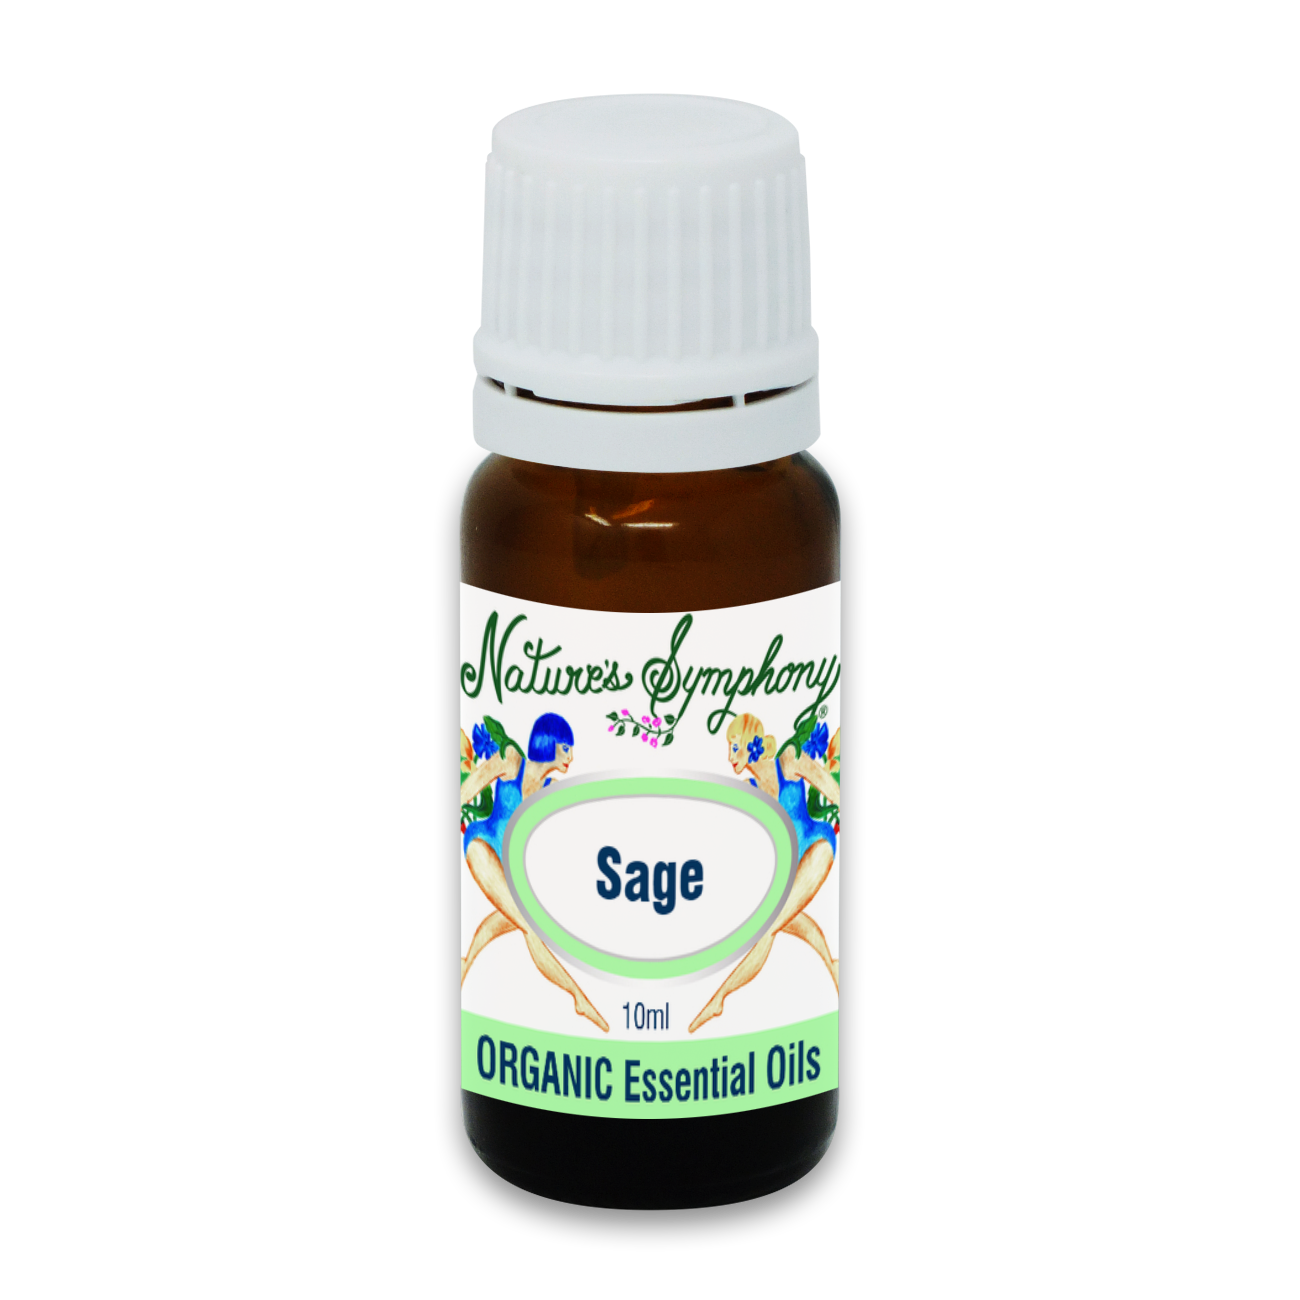 Sage, Organic/Wildcrafted oil - 10ml